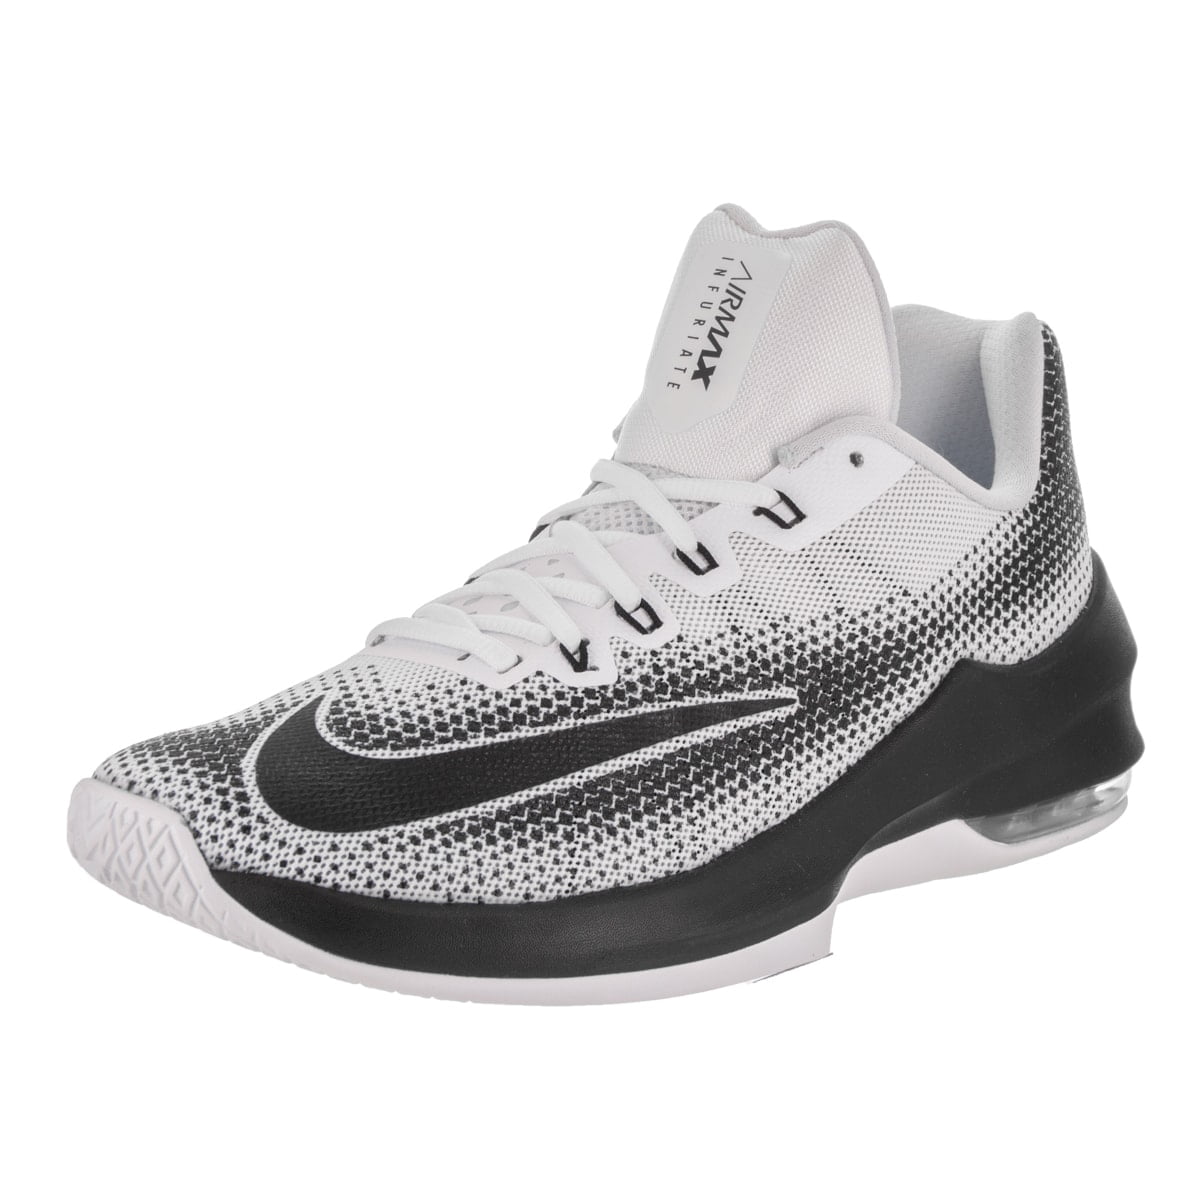 tela cubo inteligente Nike Air Max Infuriate Low Men's Shoes White/Black/Wolf Grey 852457-100 -  Walmart.com